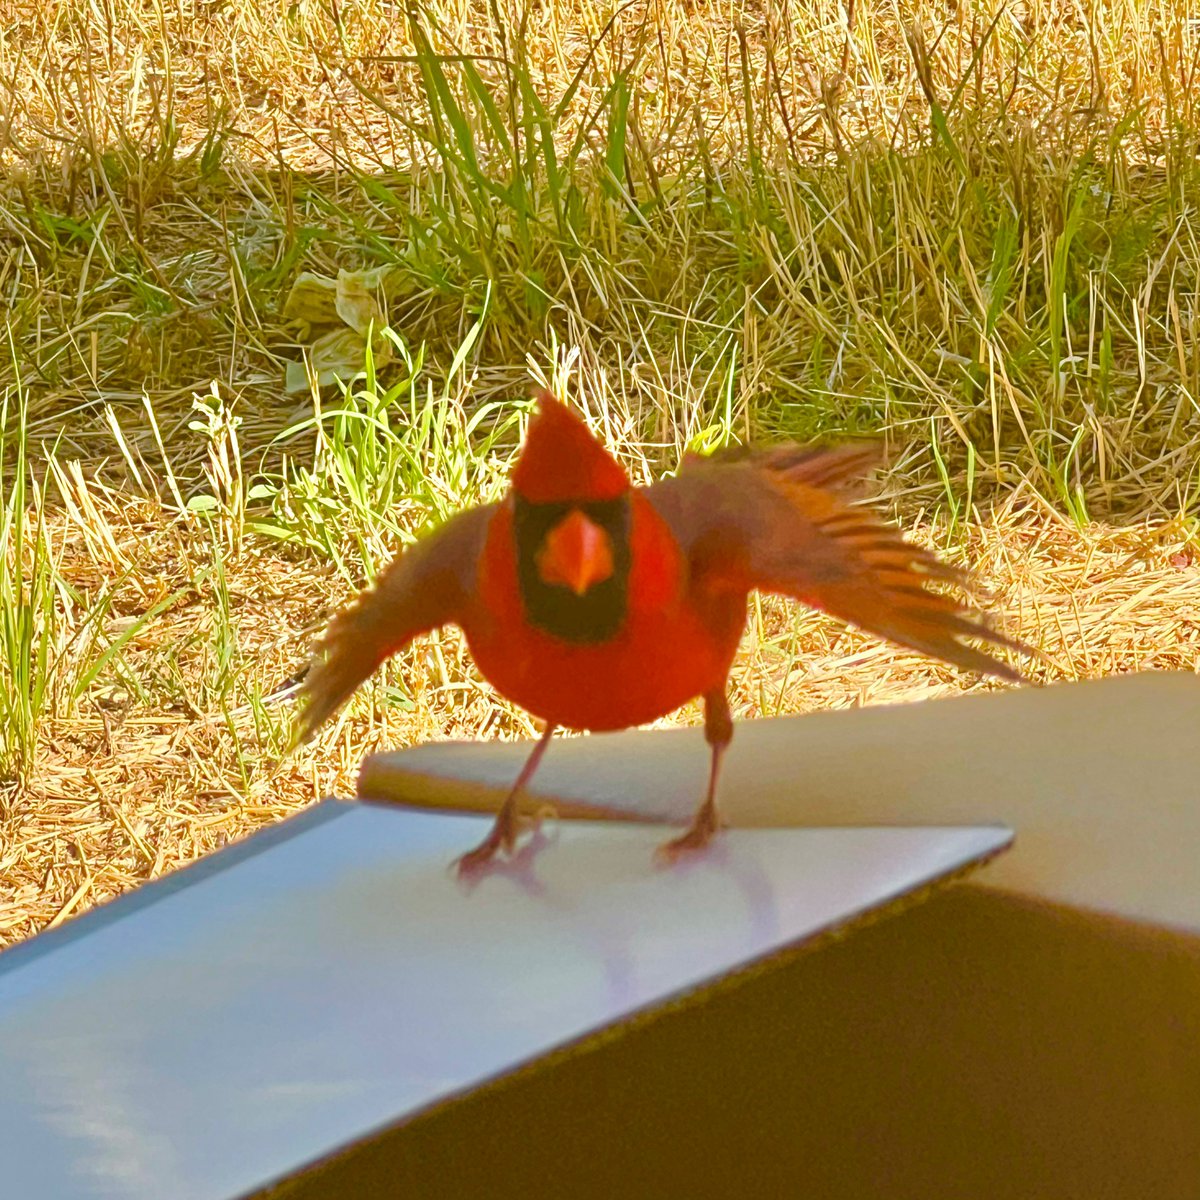 It looks like the original Angry Bird. We gave him sunflower kernels. #cardinal #AngryBirds #PossumKingdomLake #Texas